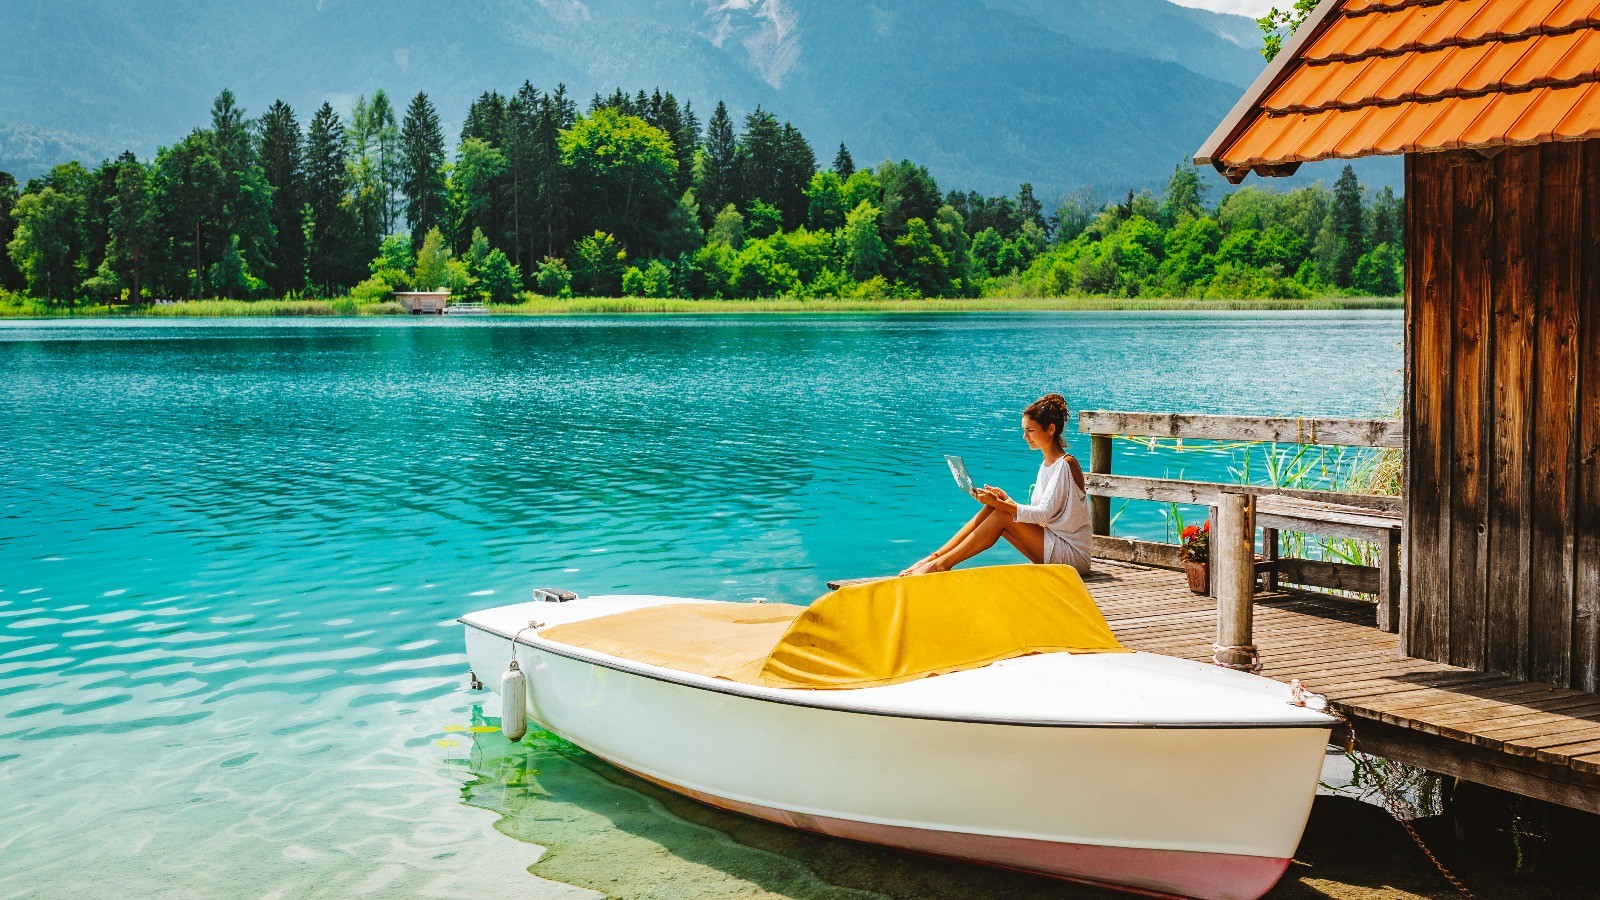 Remote working and enjoying Leisure time at Lake Faak in Austria